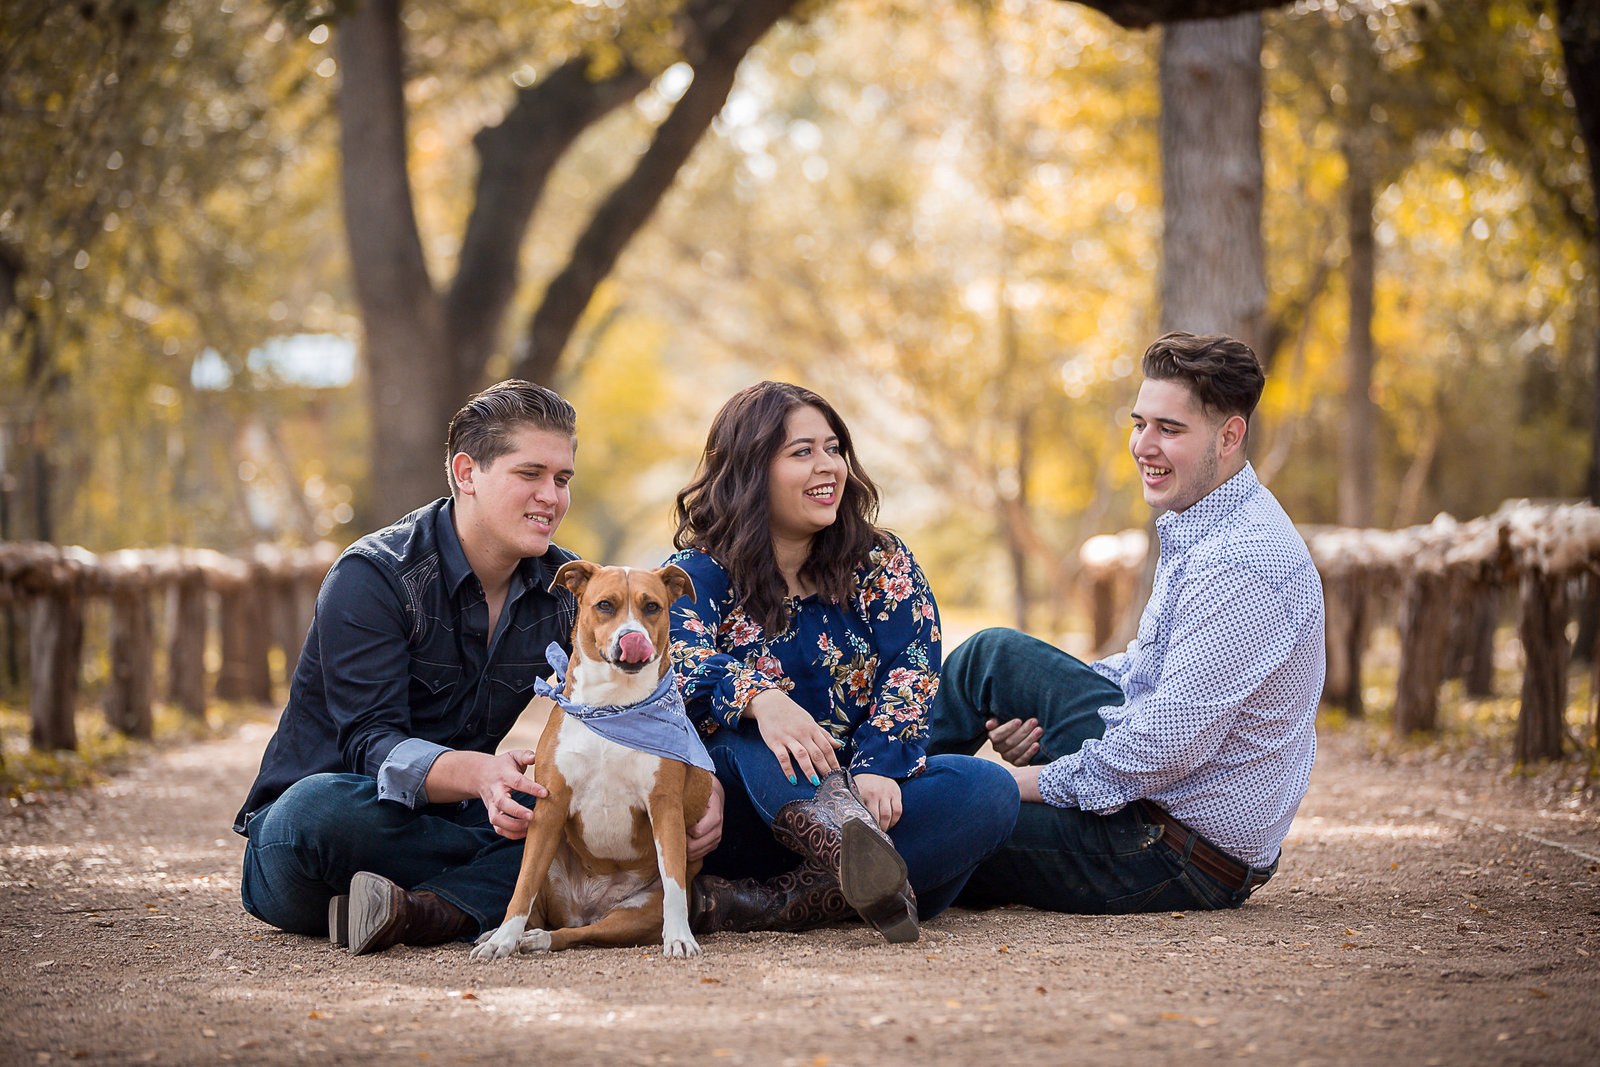 San Antonio family portrait by Kim Arredondo Photography